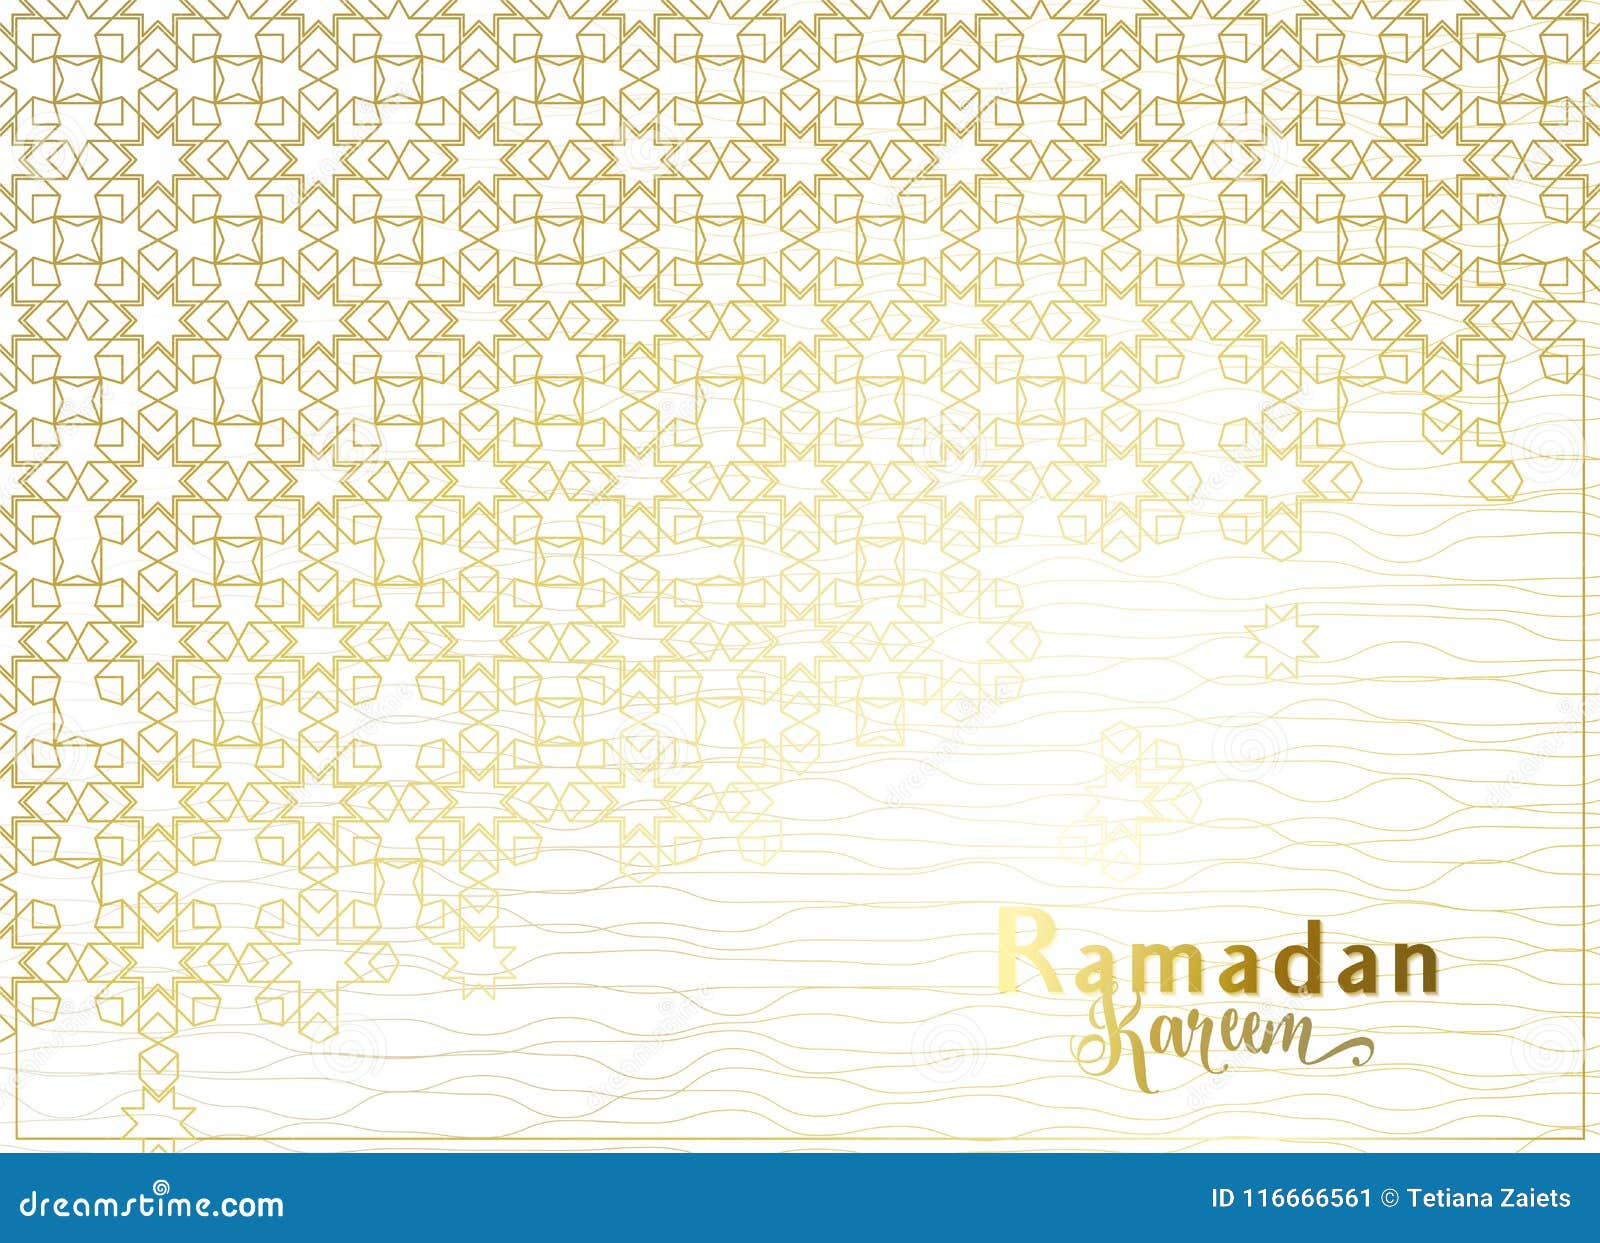 Ramadan Background With Islamic Mosque Arabian Pattern Stock Vector